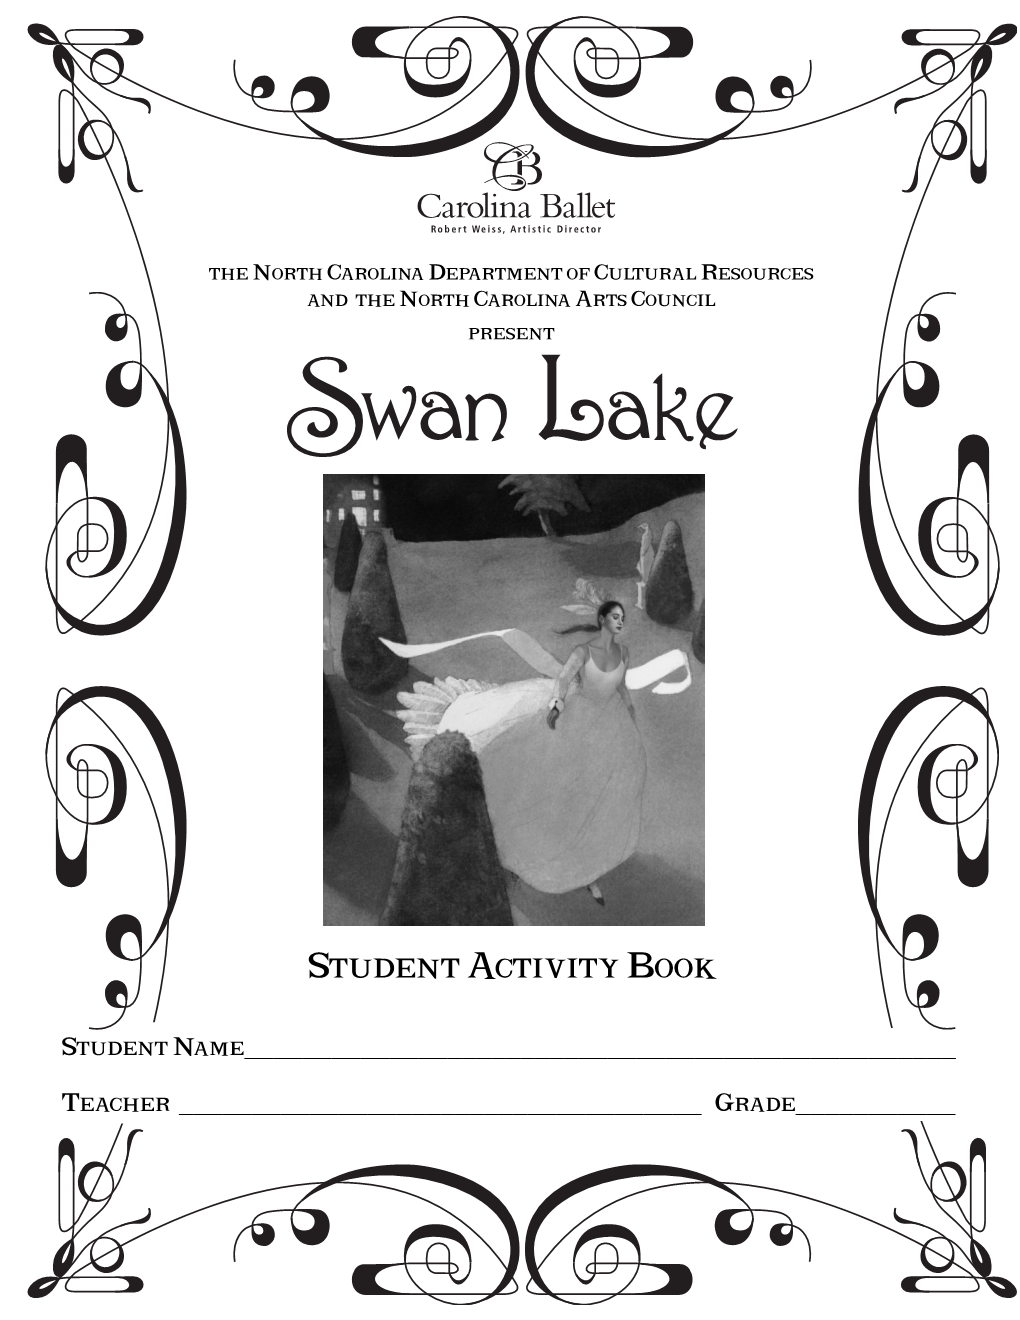 Swan Lake Student Activity Book (3